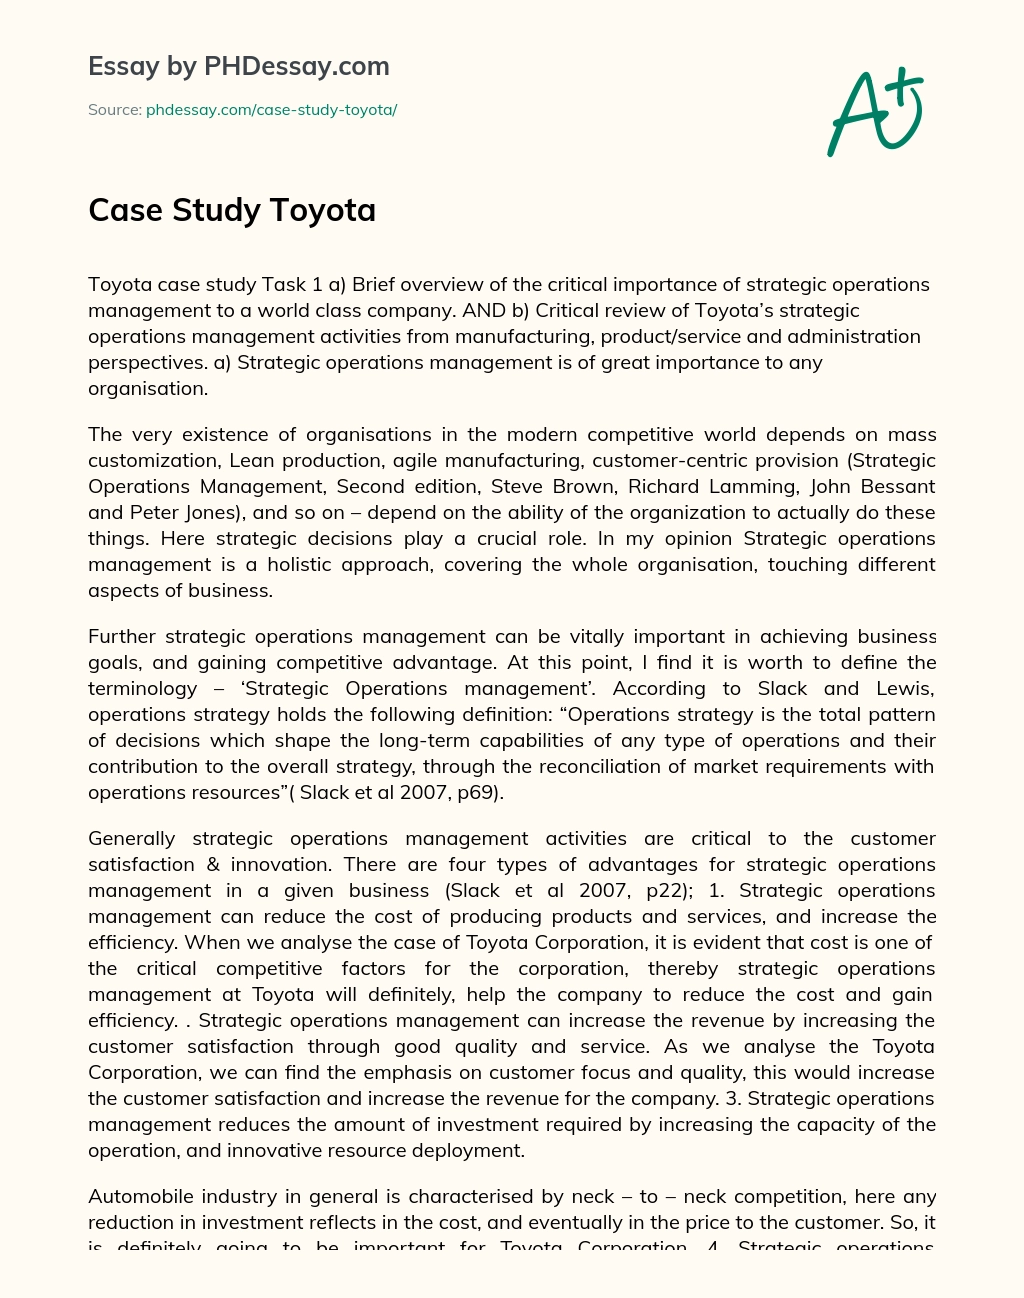 Case Study Toyota essay